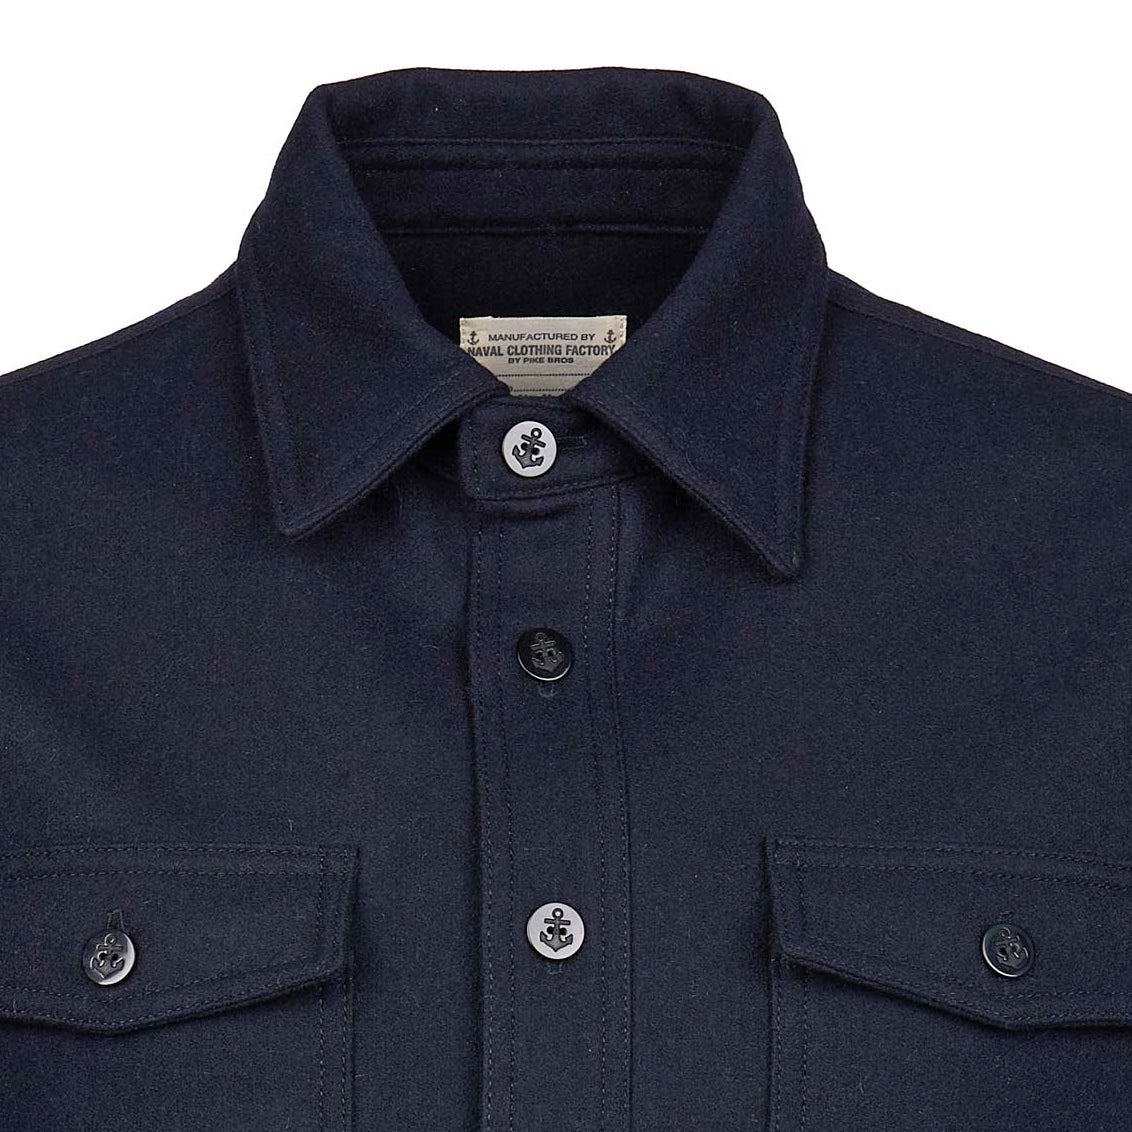 1943 CPO Shirt - Navy Wool